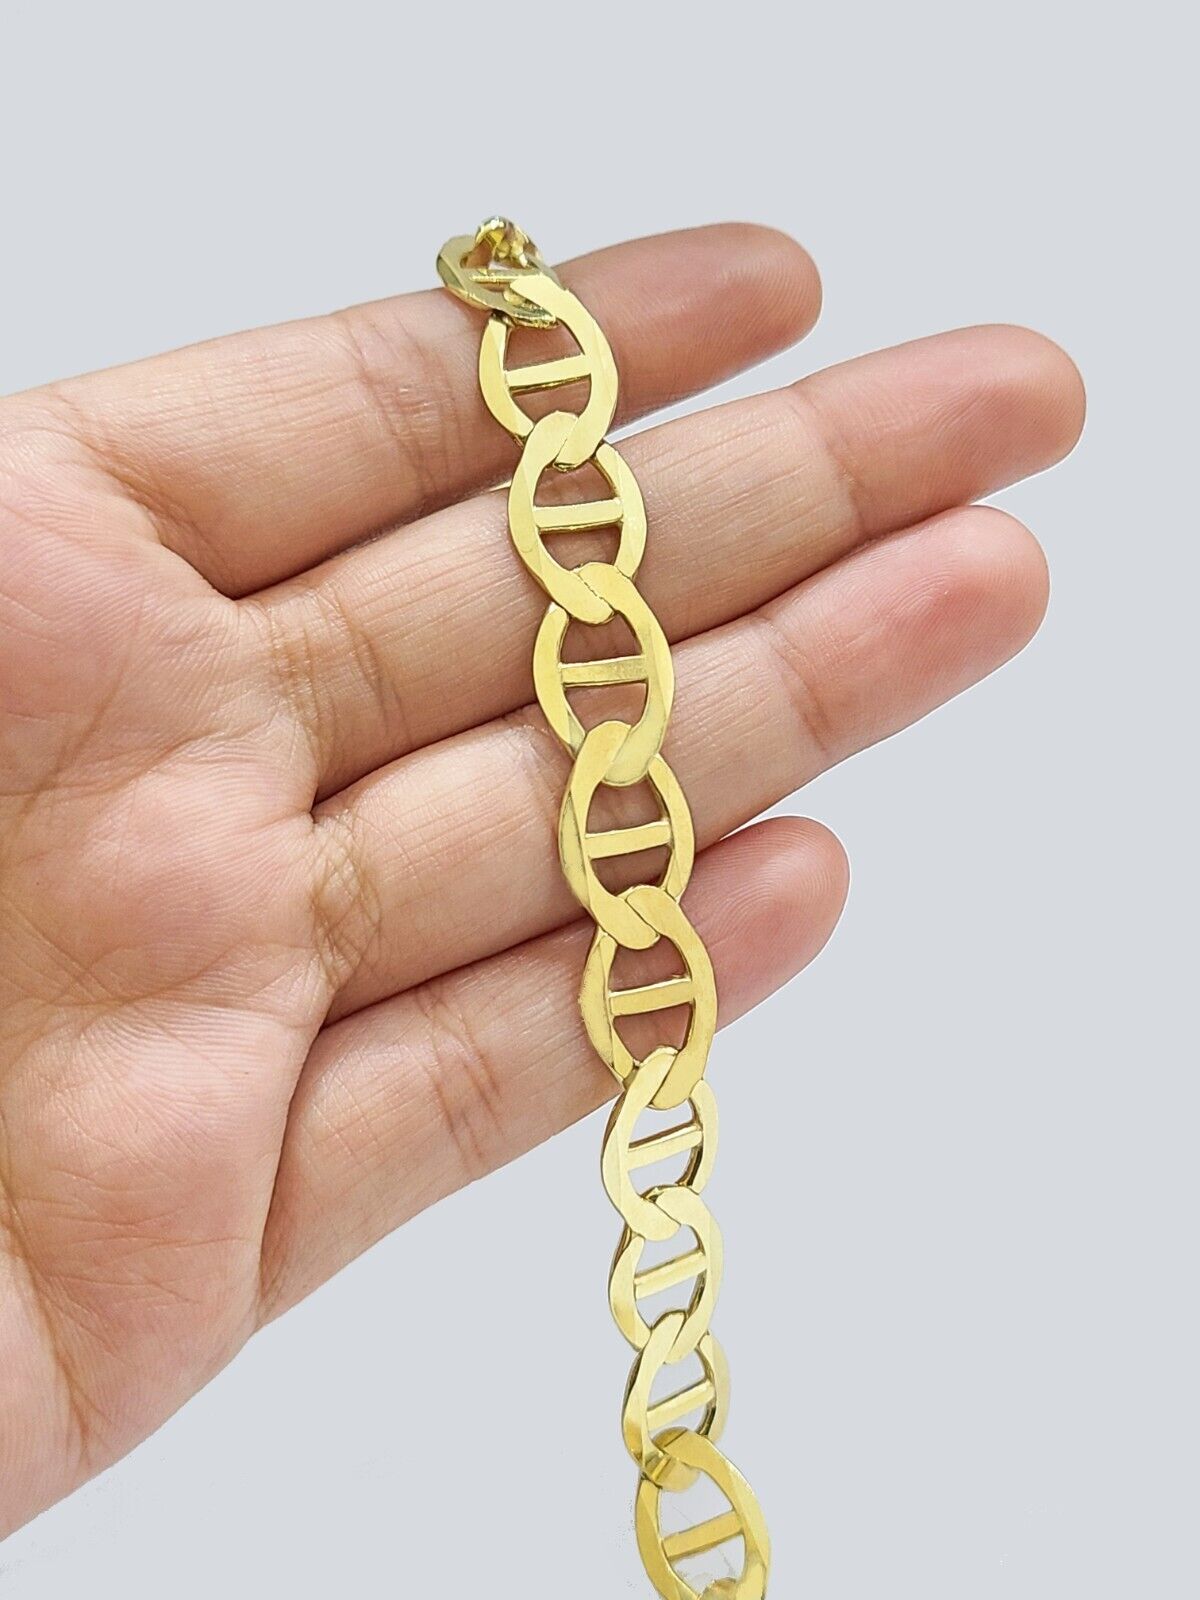 10k Yellow Gold Anchor Mariner Link Bracelet 9 inch 12mm Real 10kt Lobster Lock